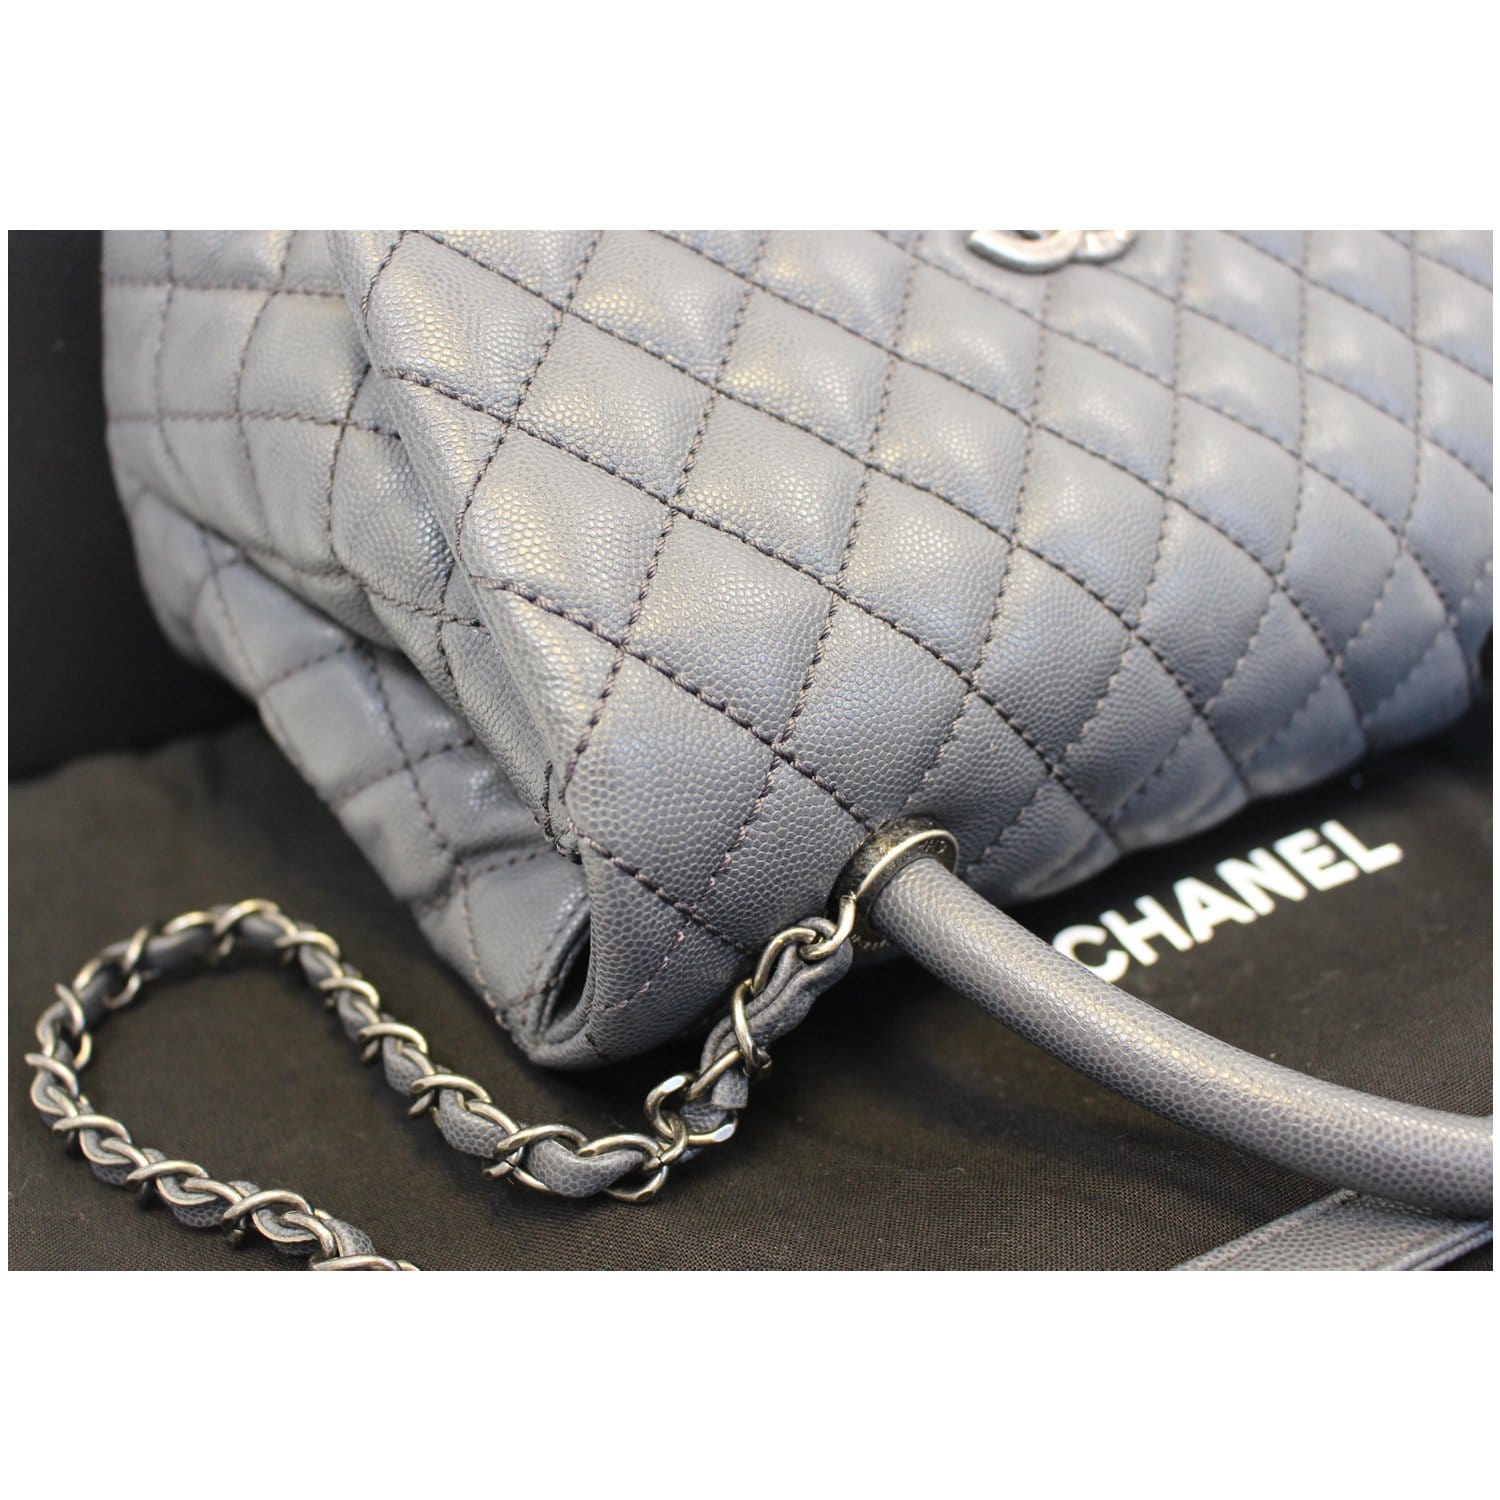 Coco handle leather handbag Chanel Purple in Leather - 20115905